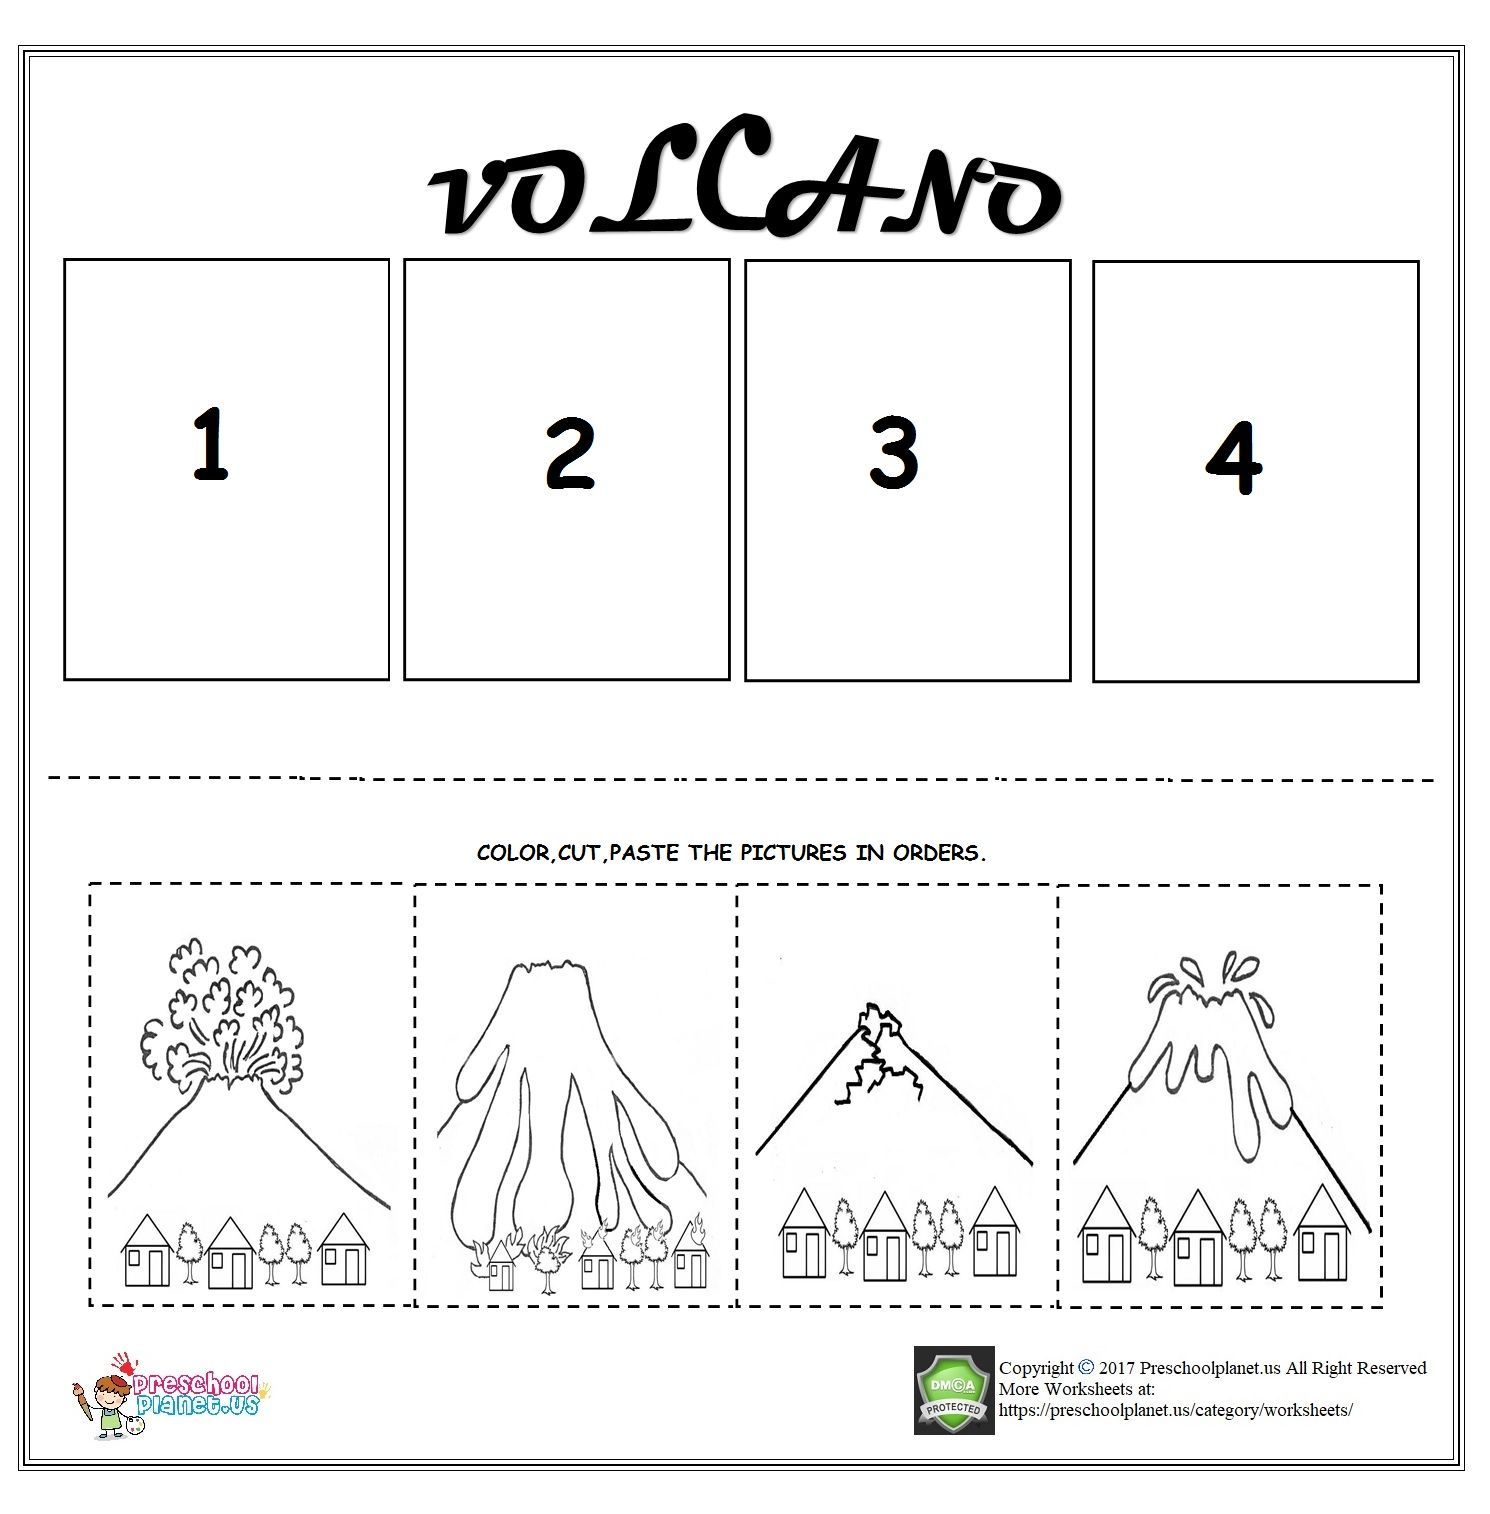 Volcano sequencing worksheet for kids -   12 Event Planning Worksheet for kids ideas